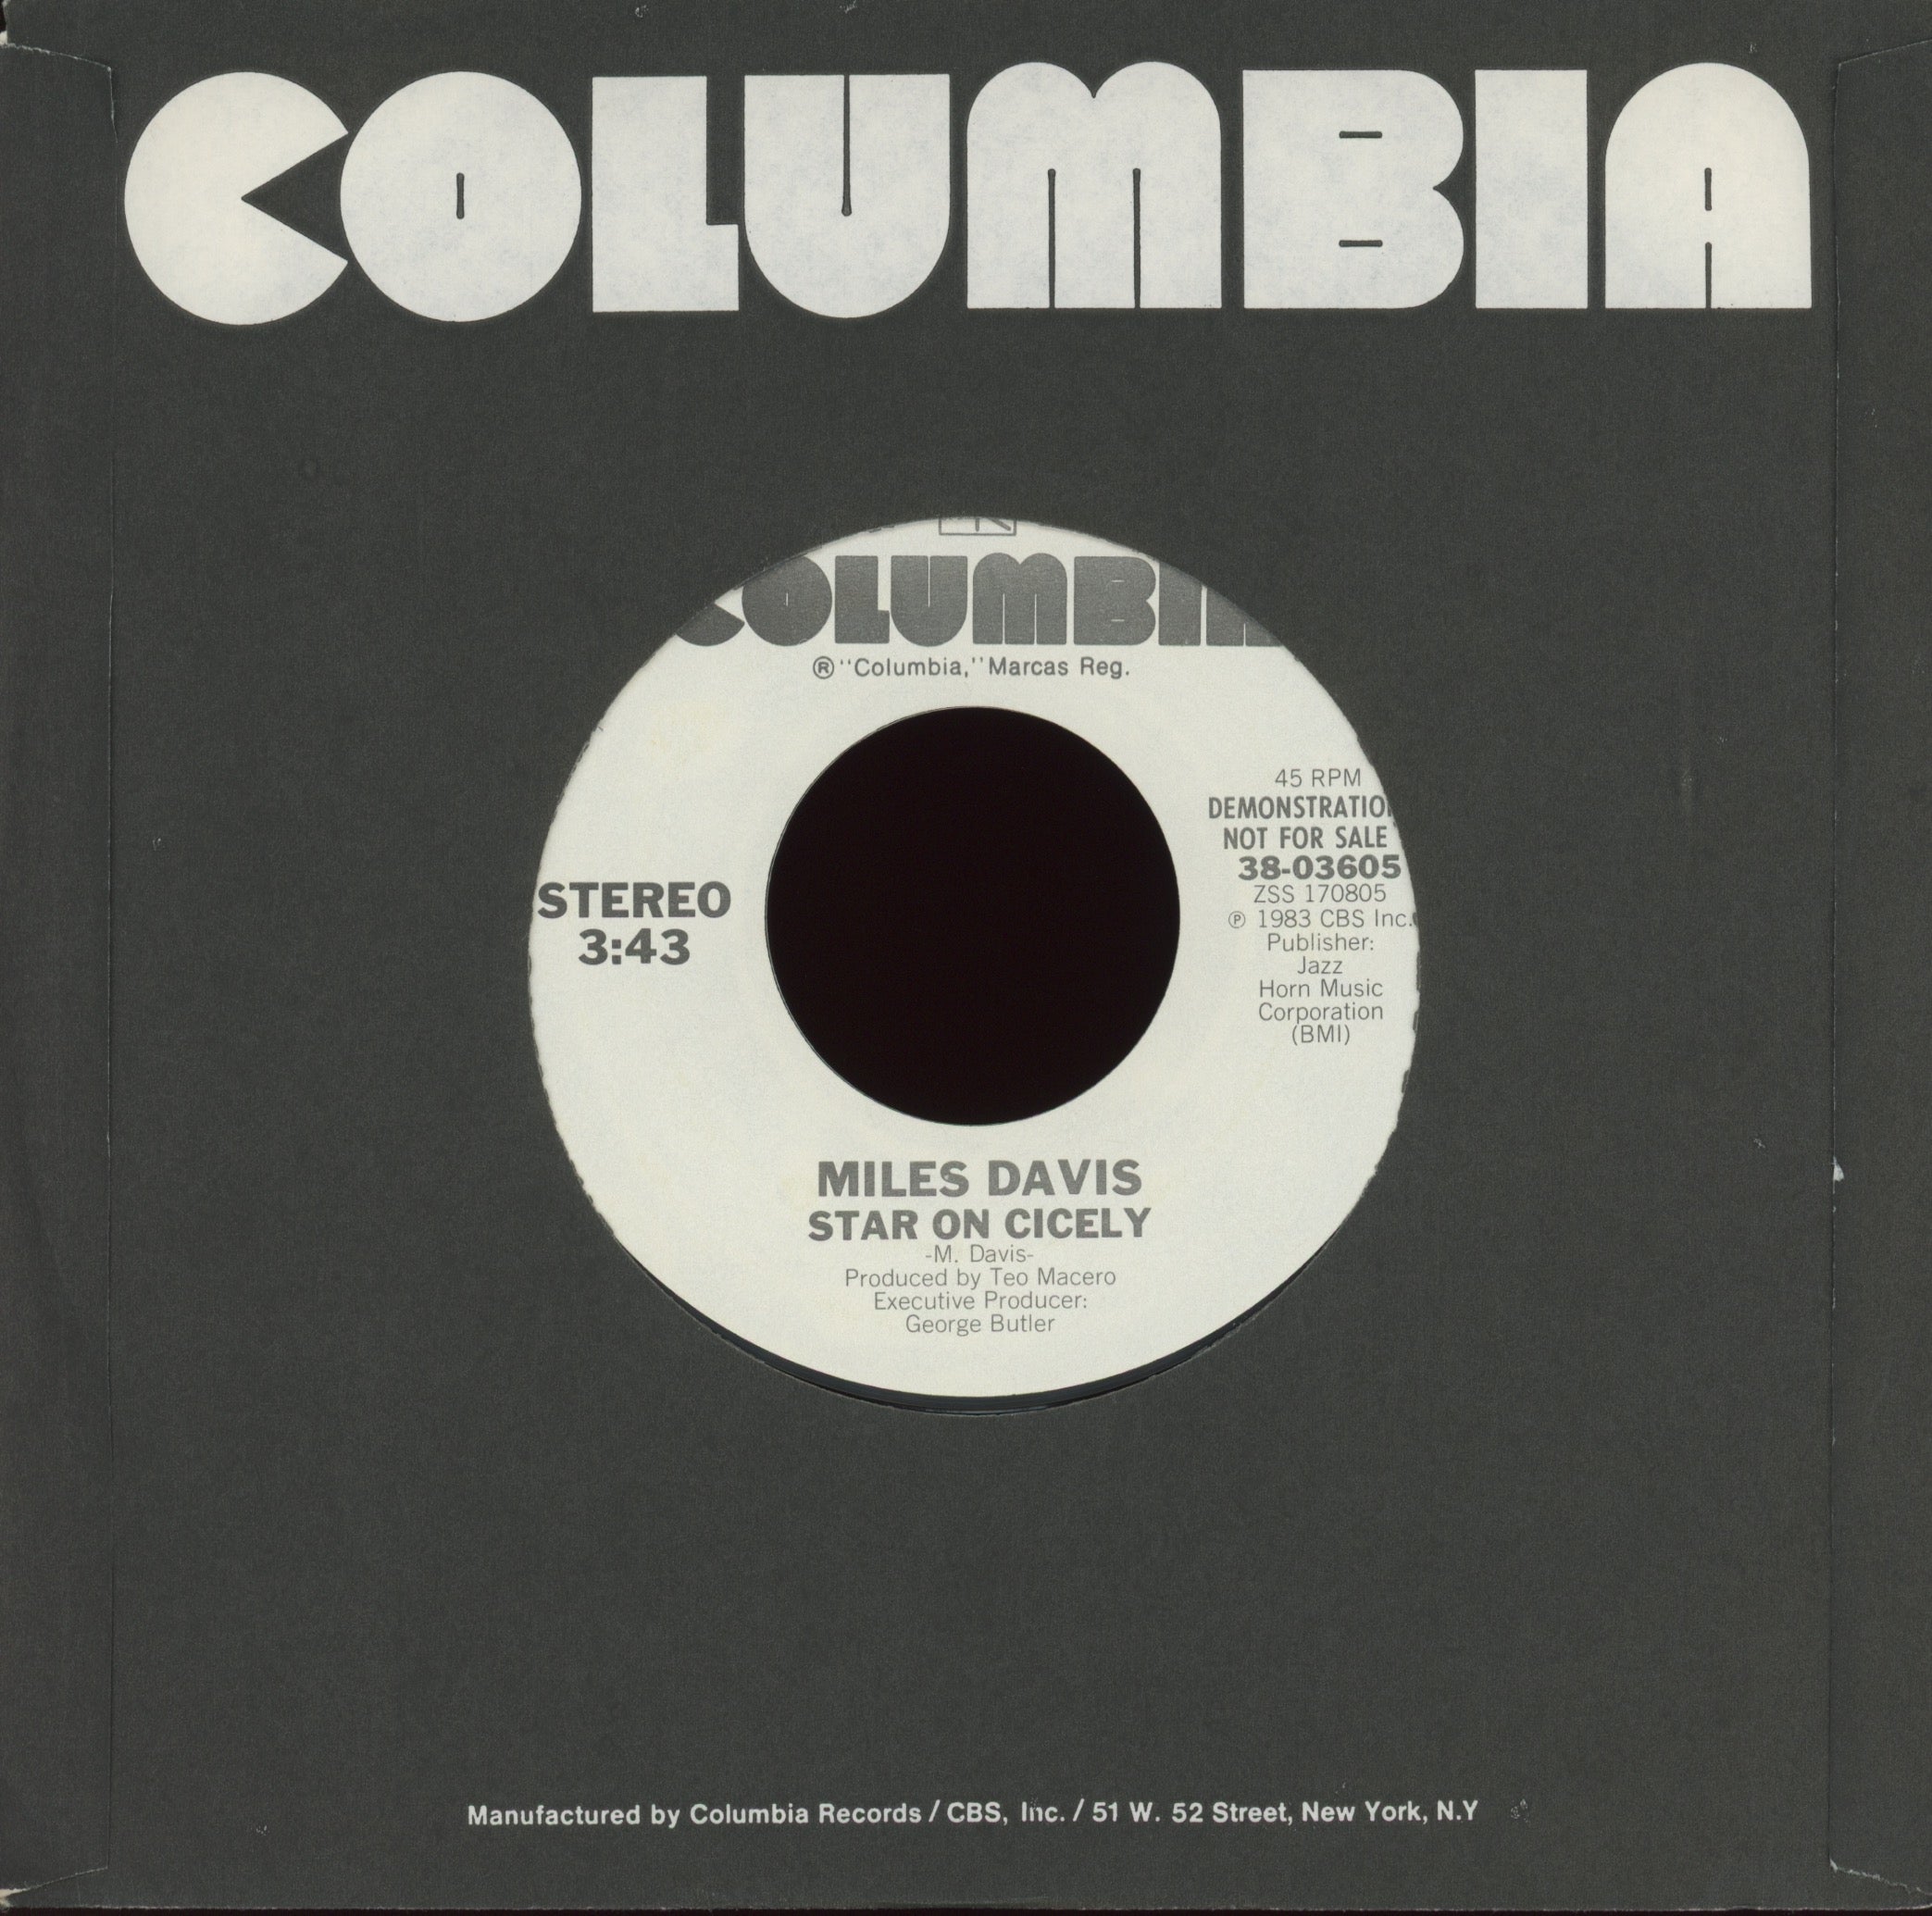 Miles Davis - Star On Cicely on Columbia Promo